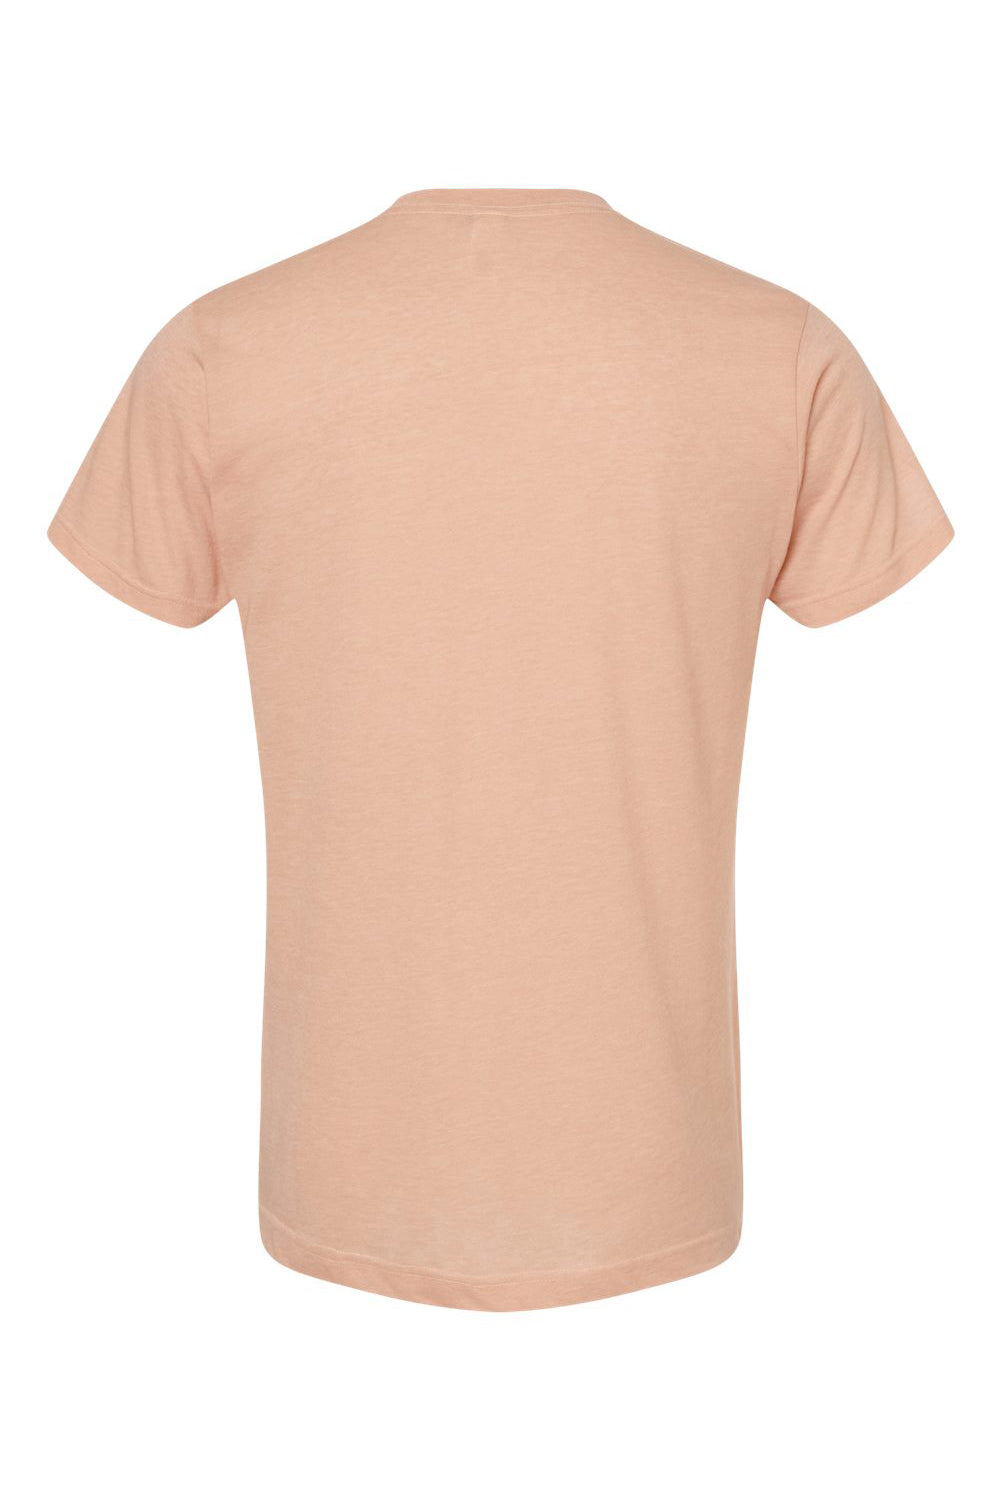 Tultex 241 Mens Poly-Rich Short Sleeve Crewneck T-Shirt Heather Peach Flat Back